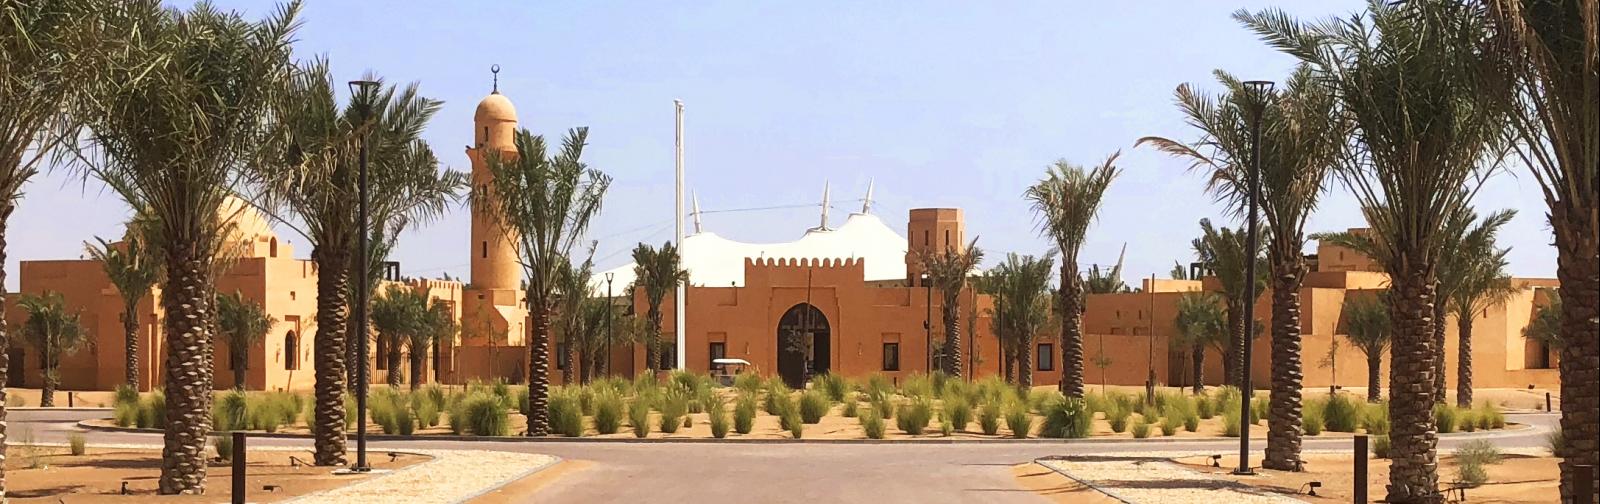 Al-Bedayer Desert Camp